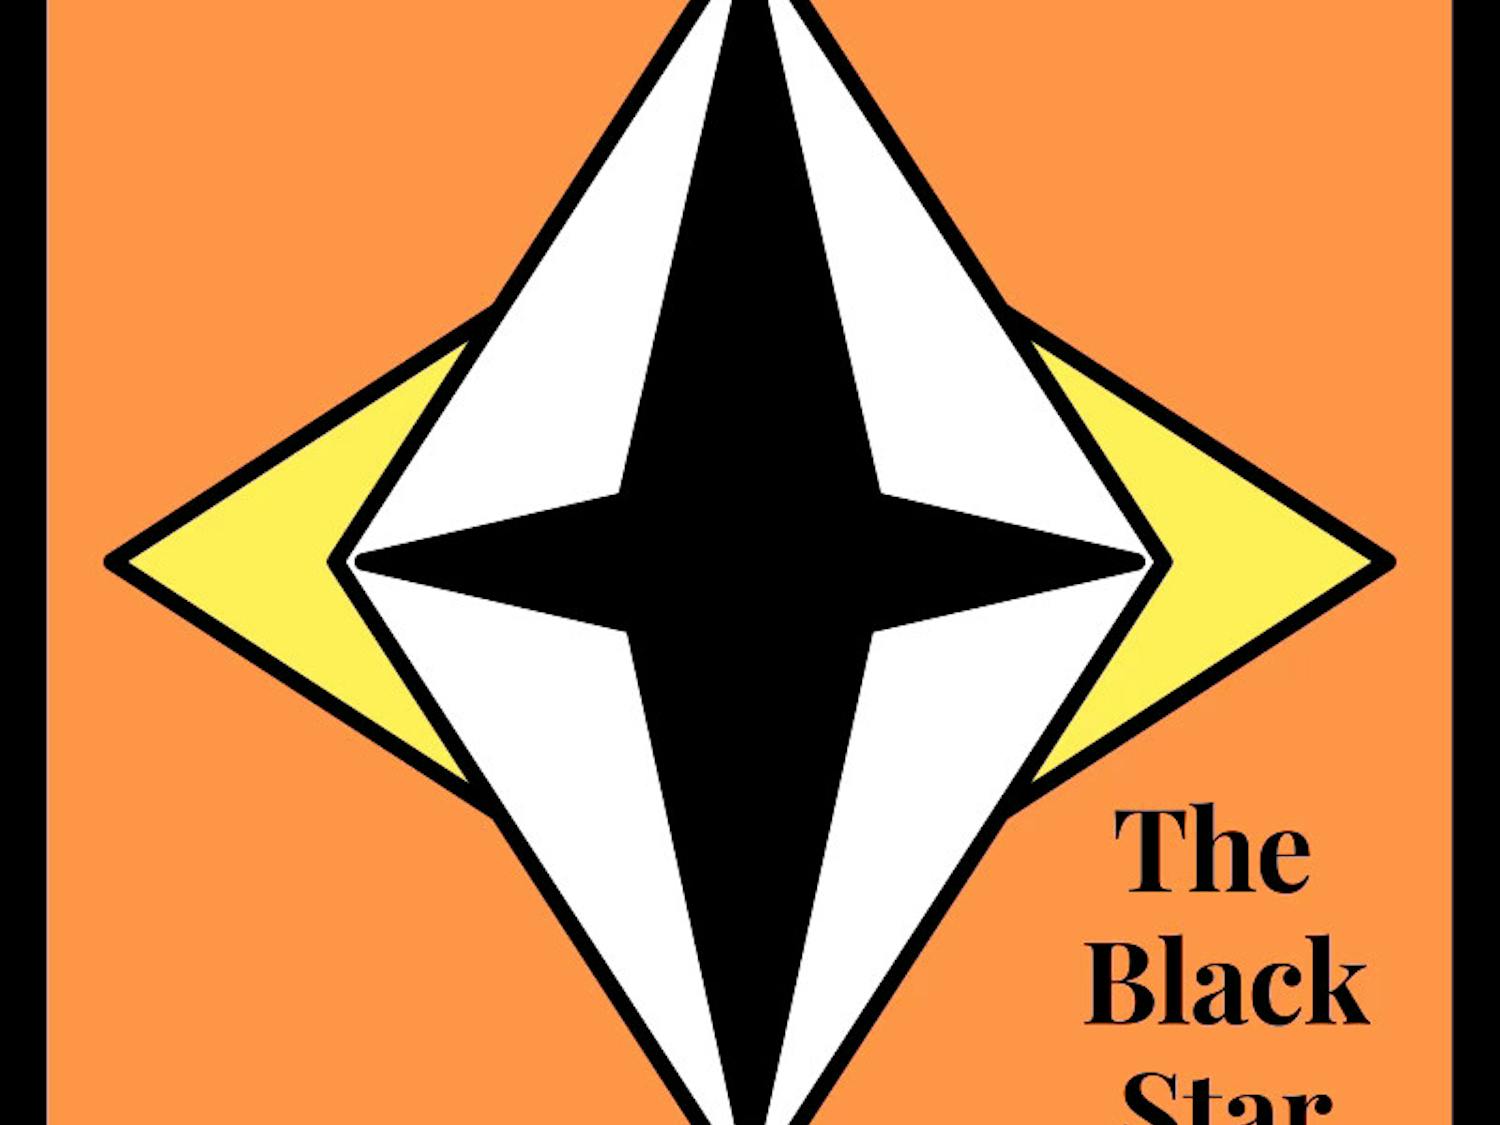 The Black Star Journal